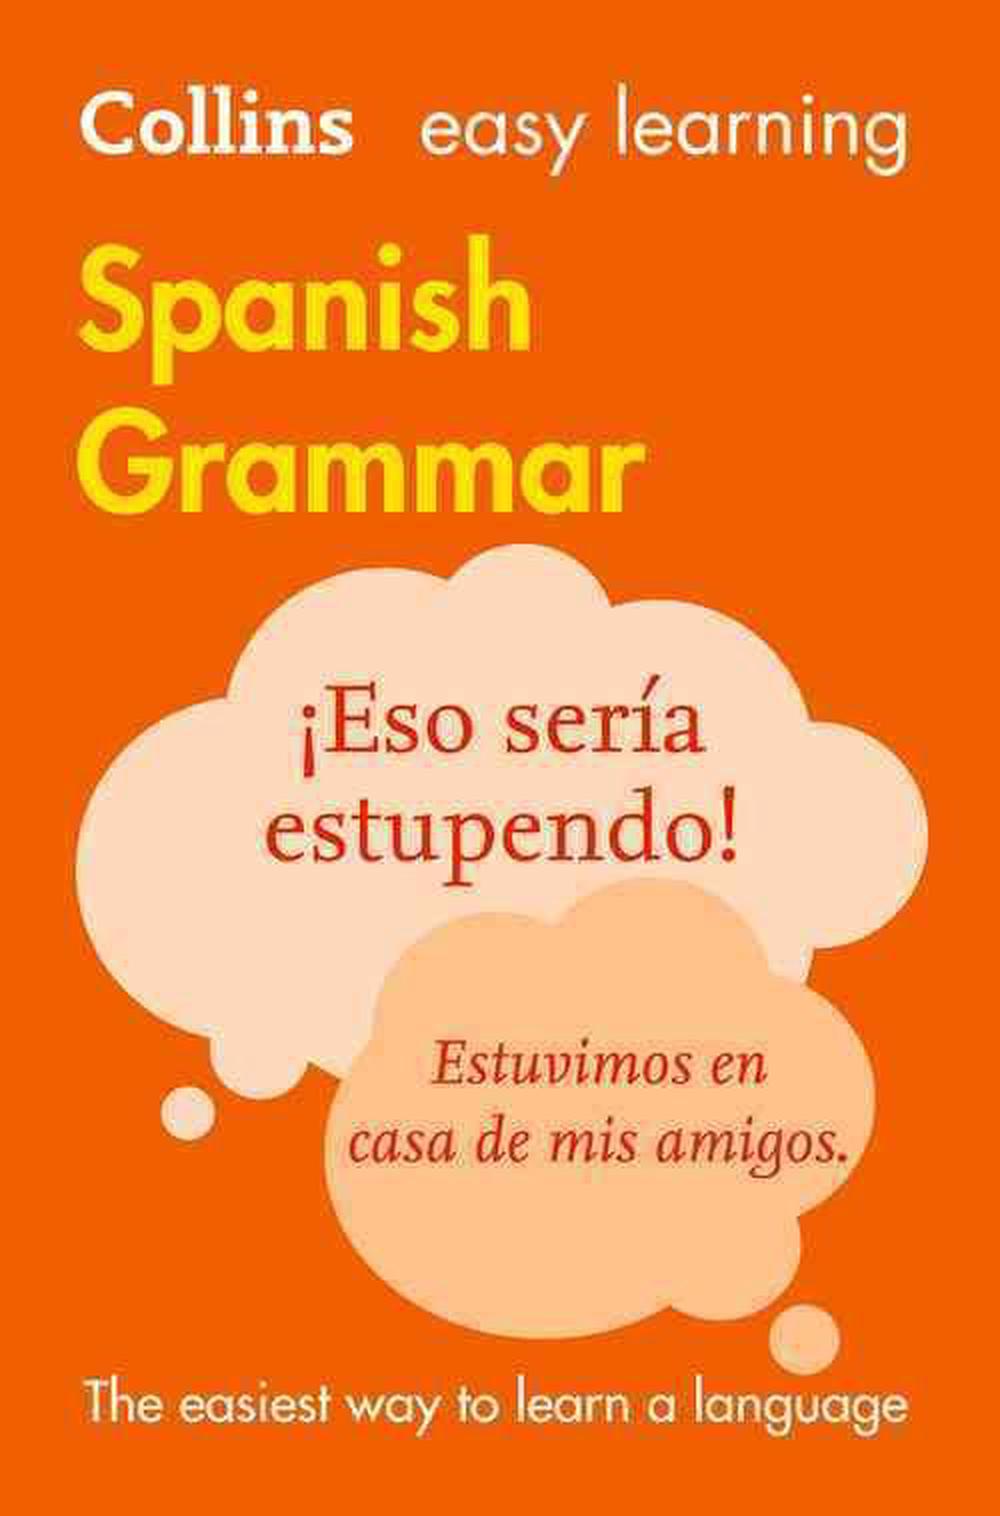 spanish dictionaries